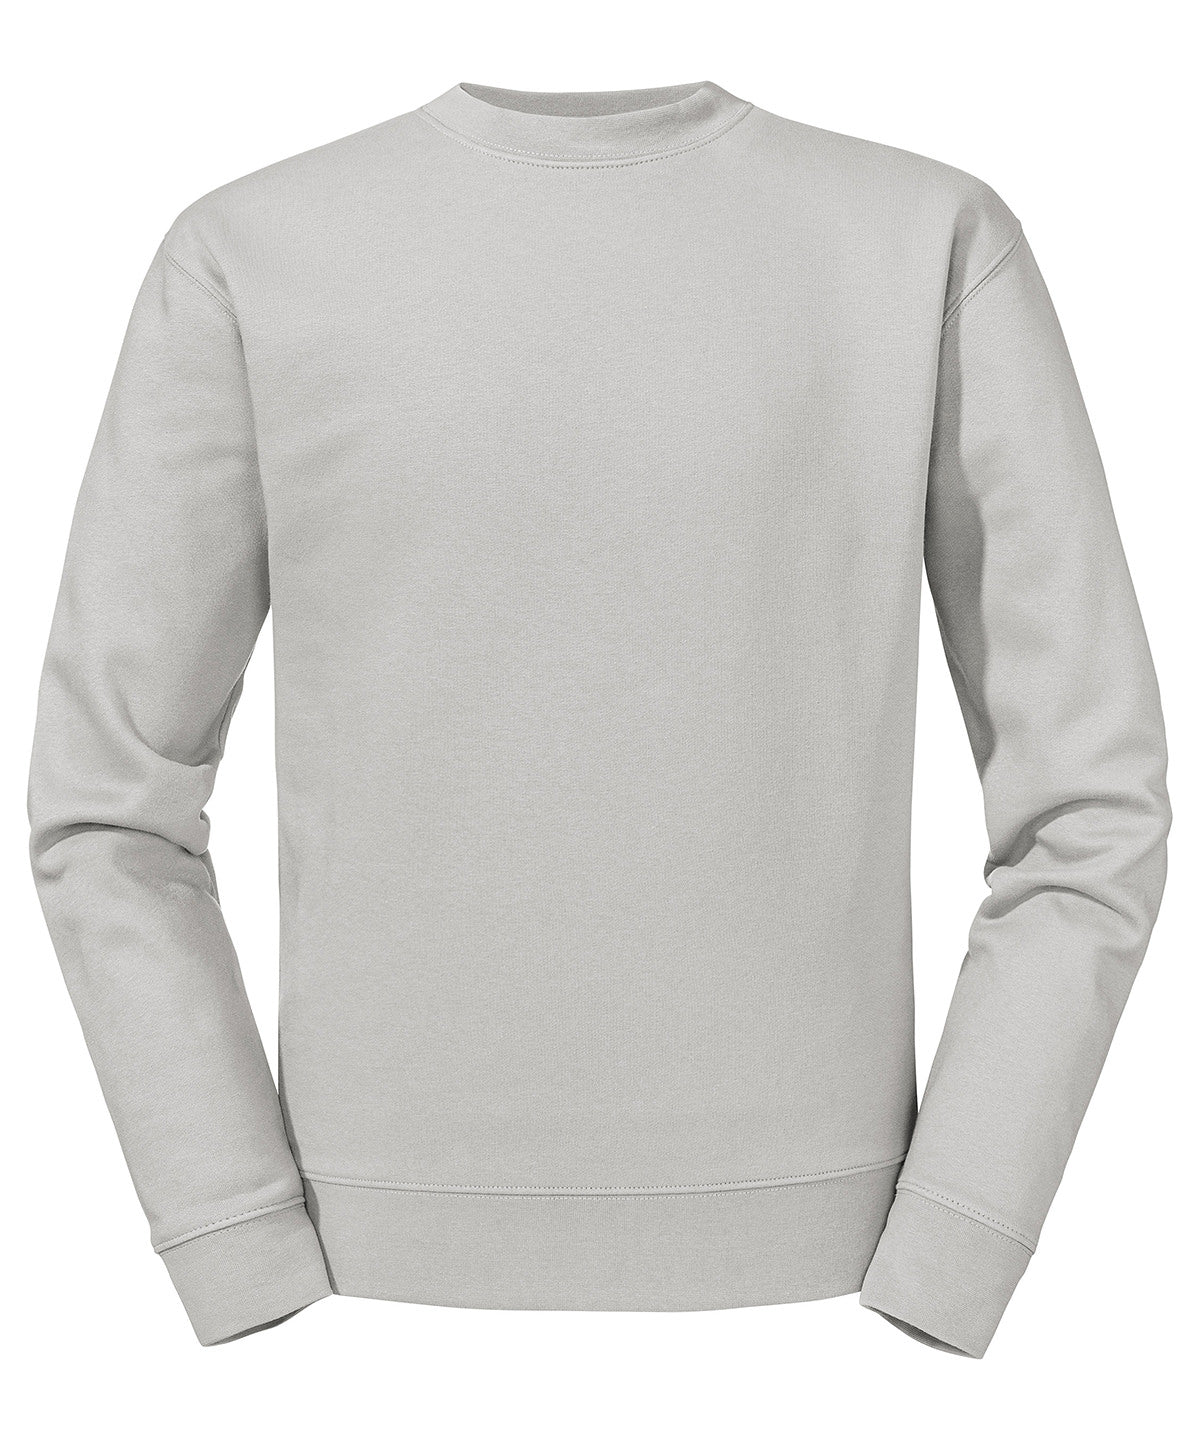 Set-in sleeve sweatshirt